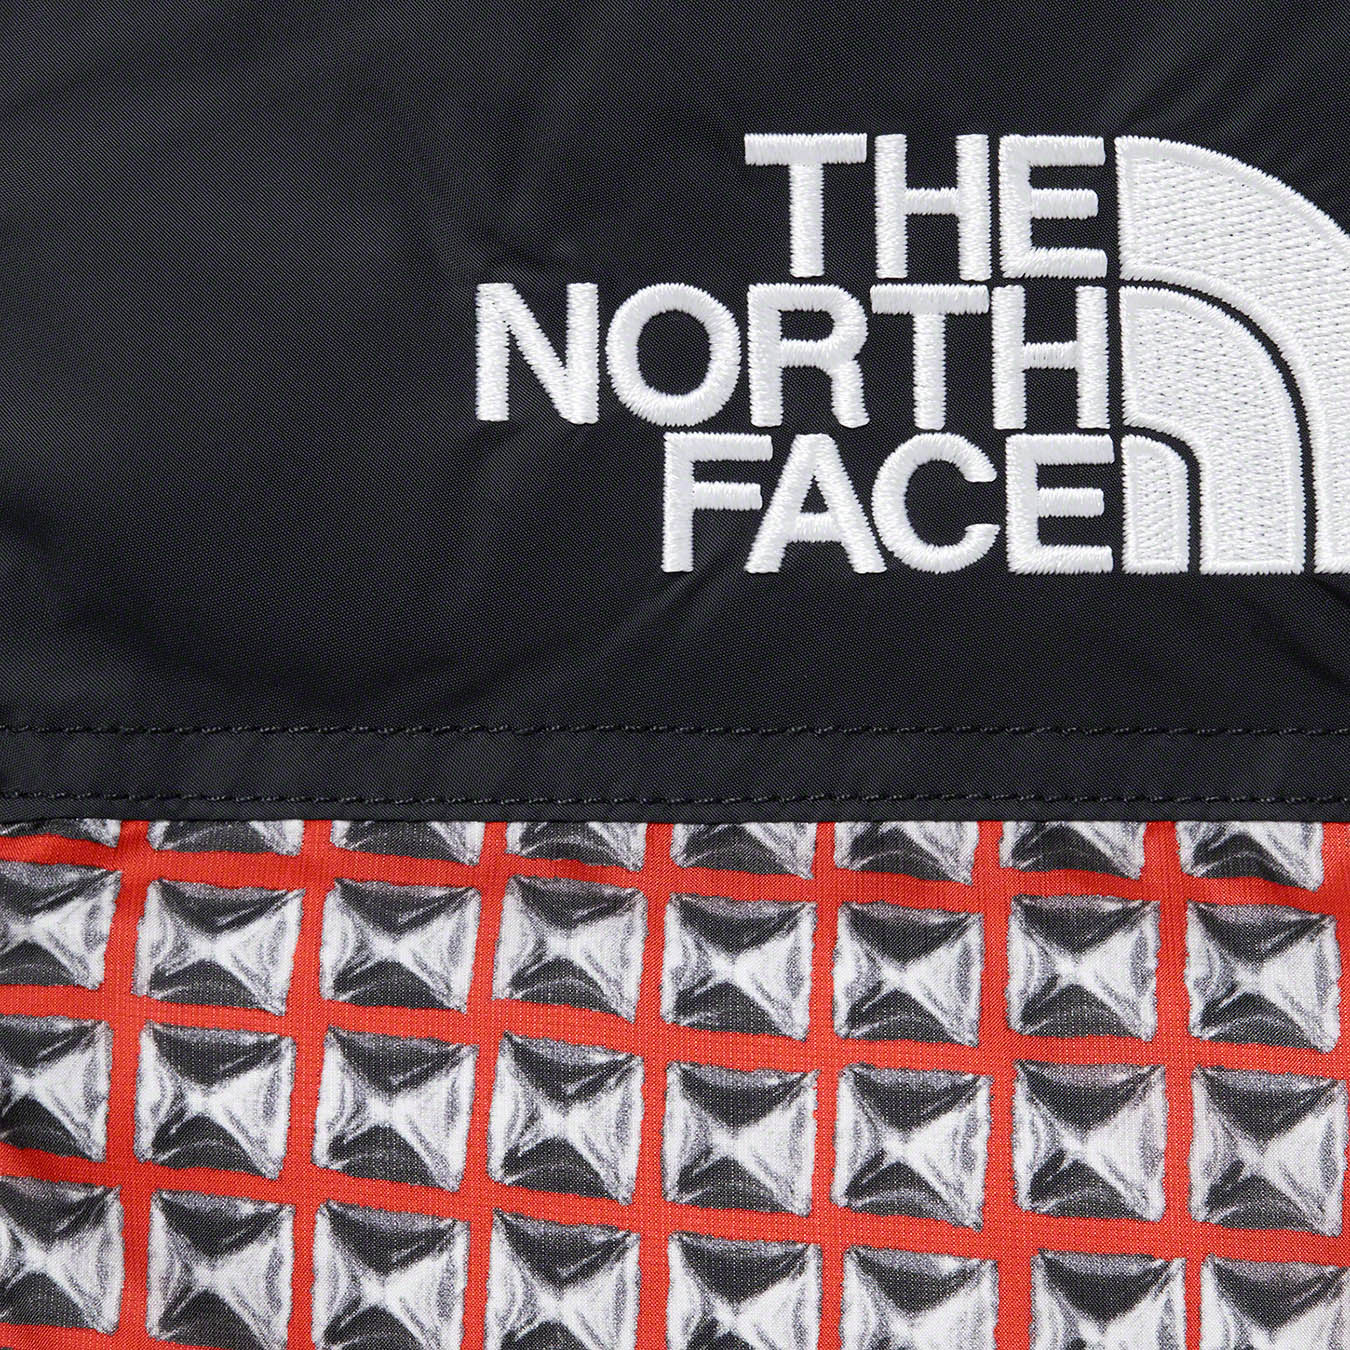 Supreme®/The North Face® Studded Nuptse Vest